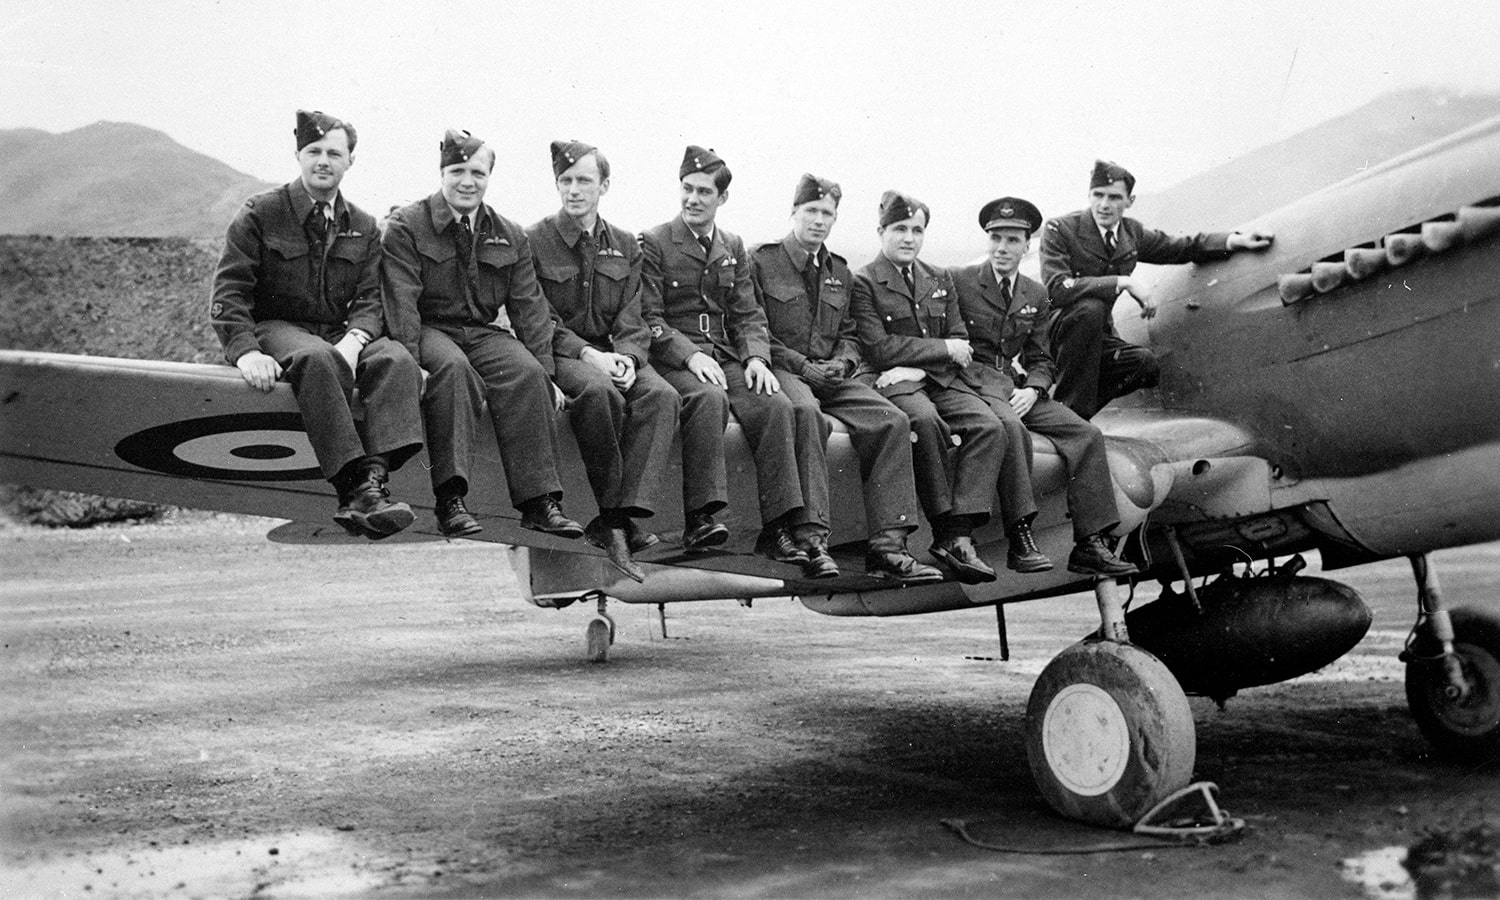 Members sitting on plane wing